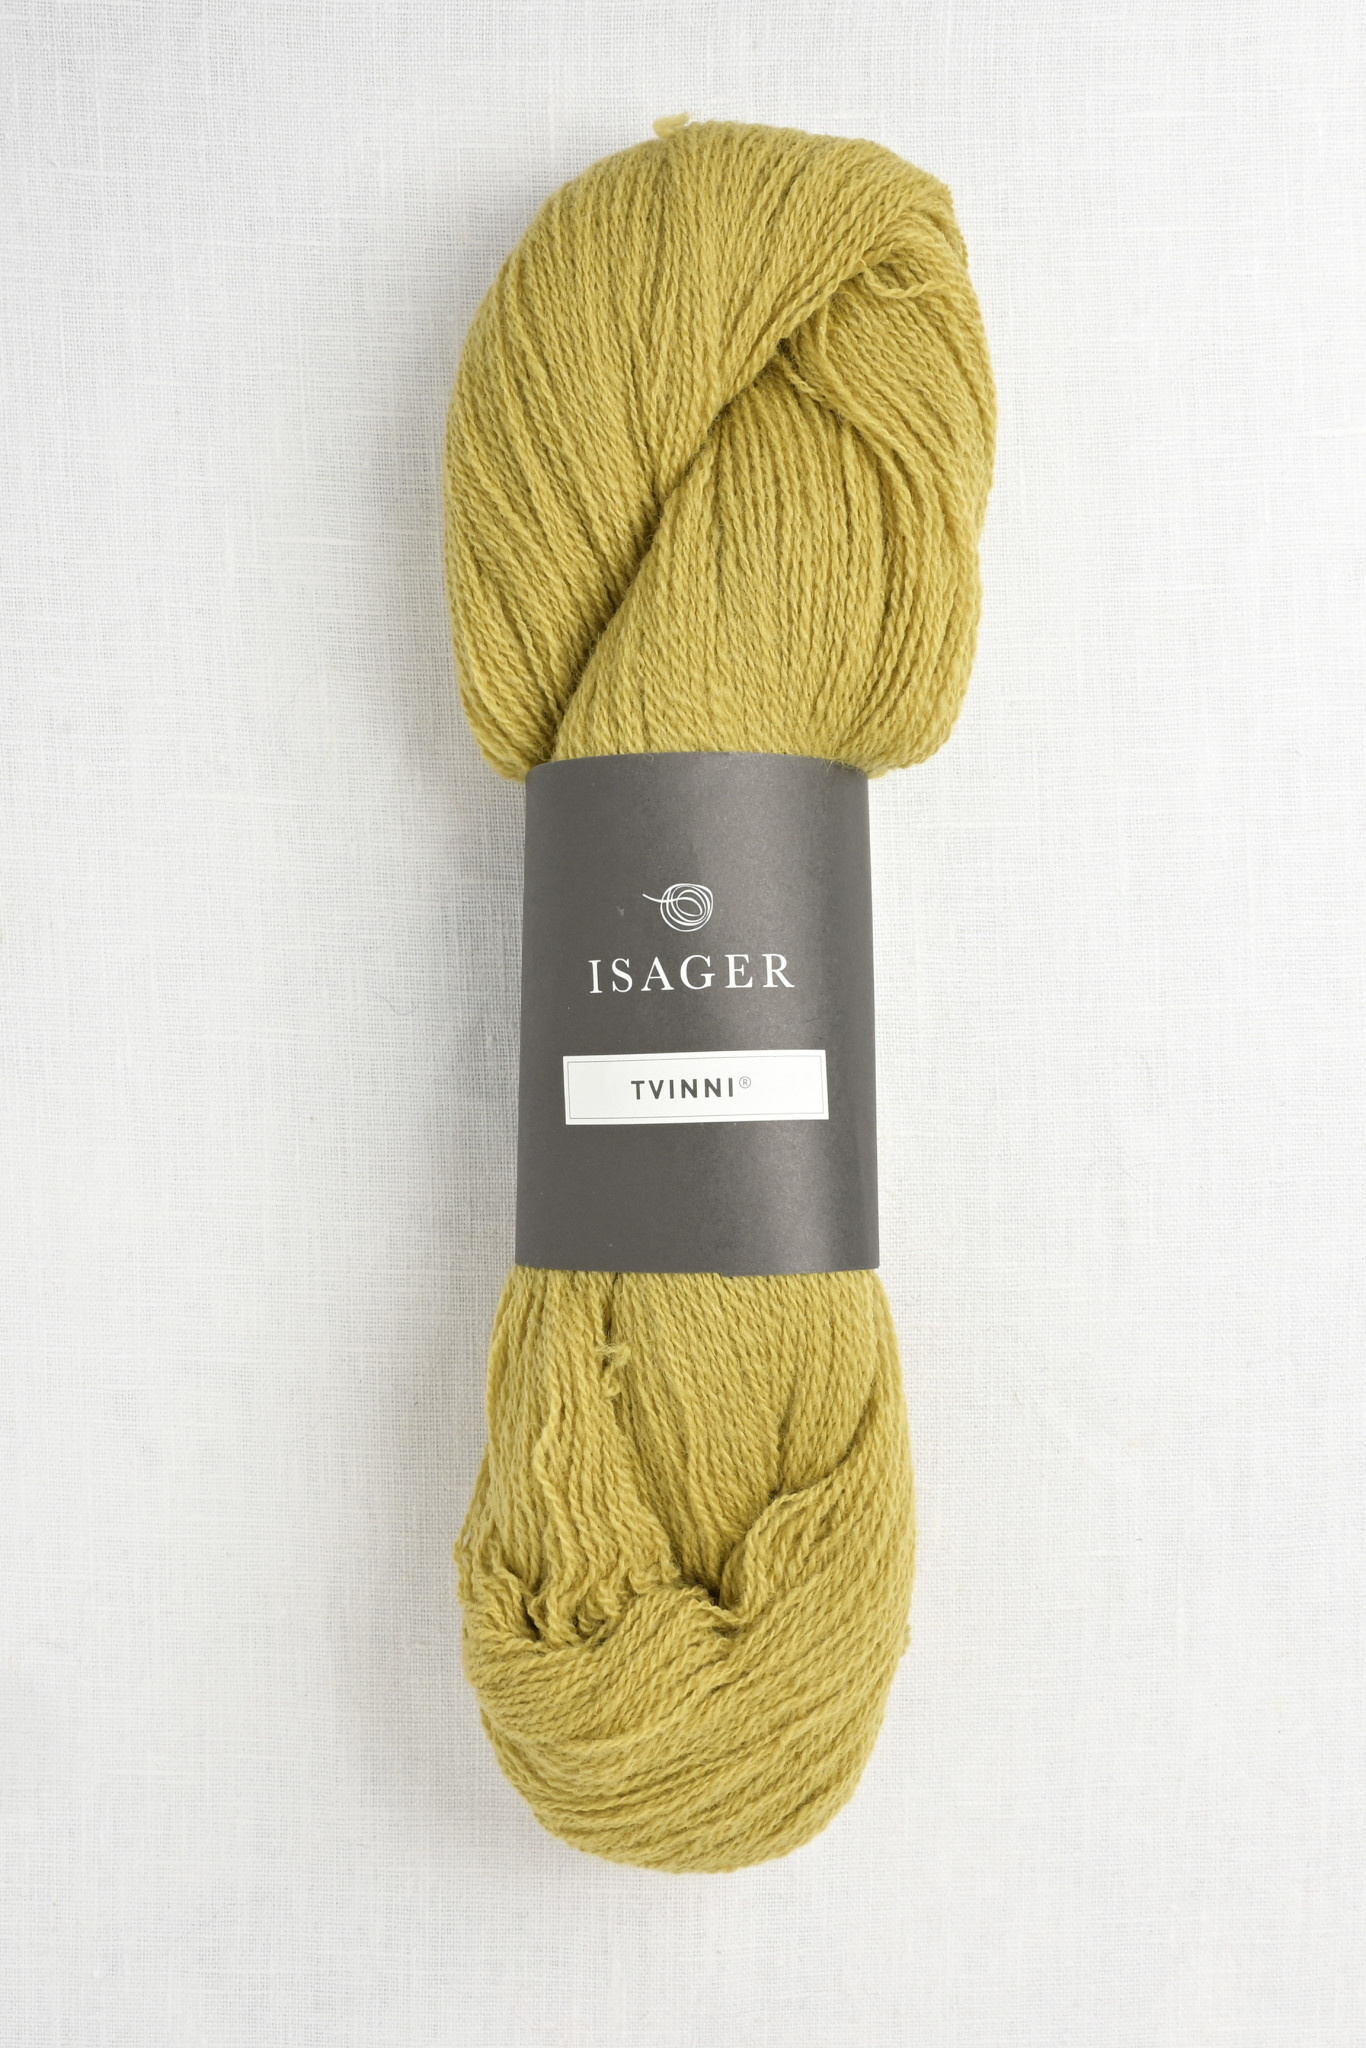 Visum ulv udvikling Isager Tvinni 40 Straw - Wool and Company Fine Yarn